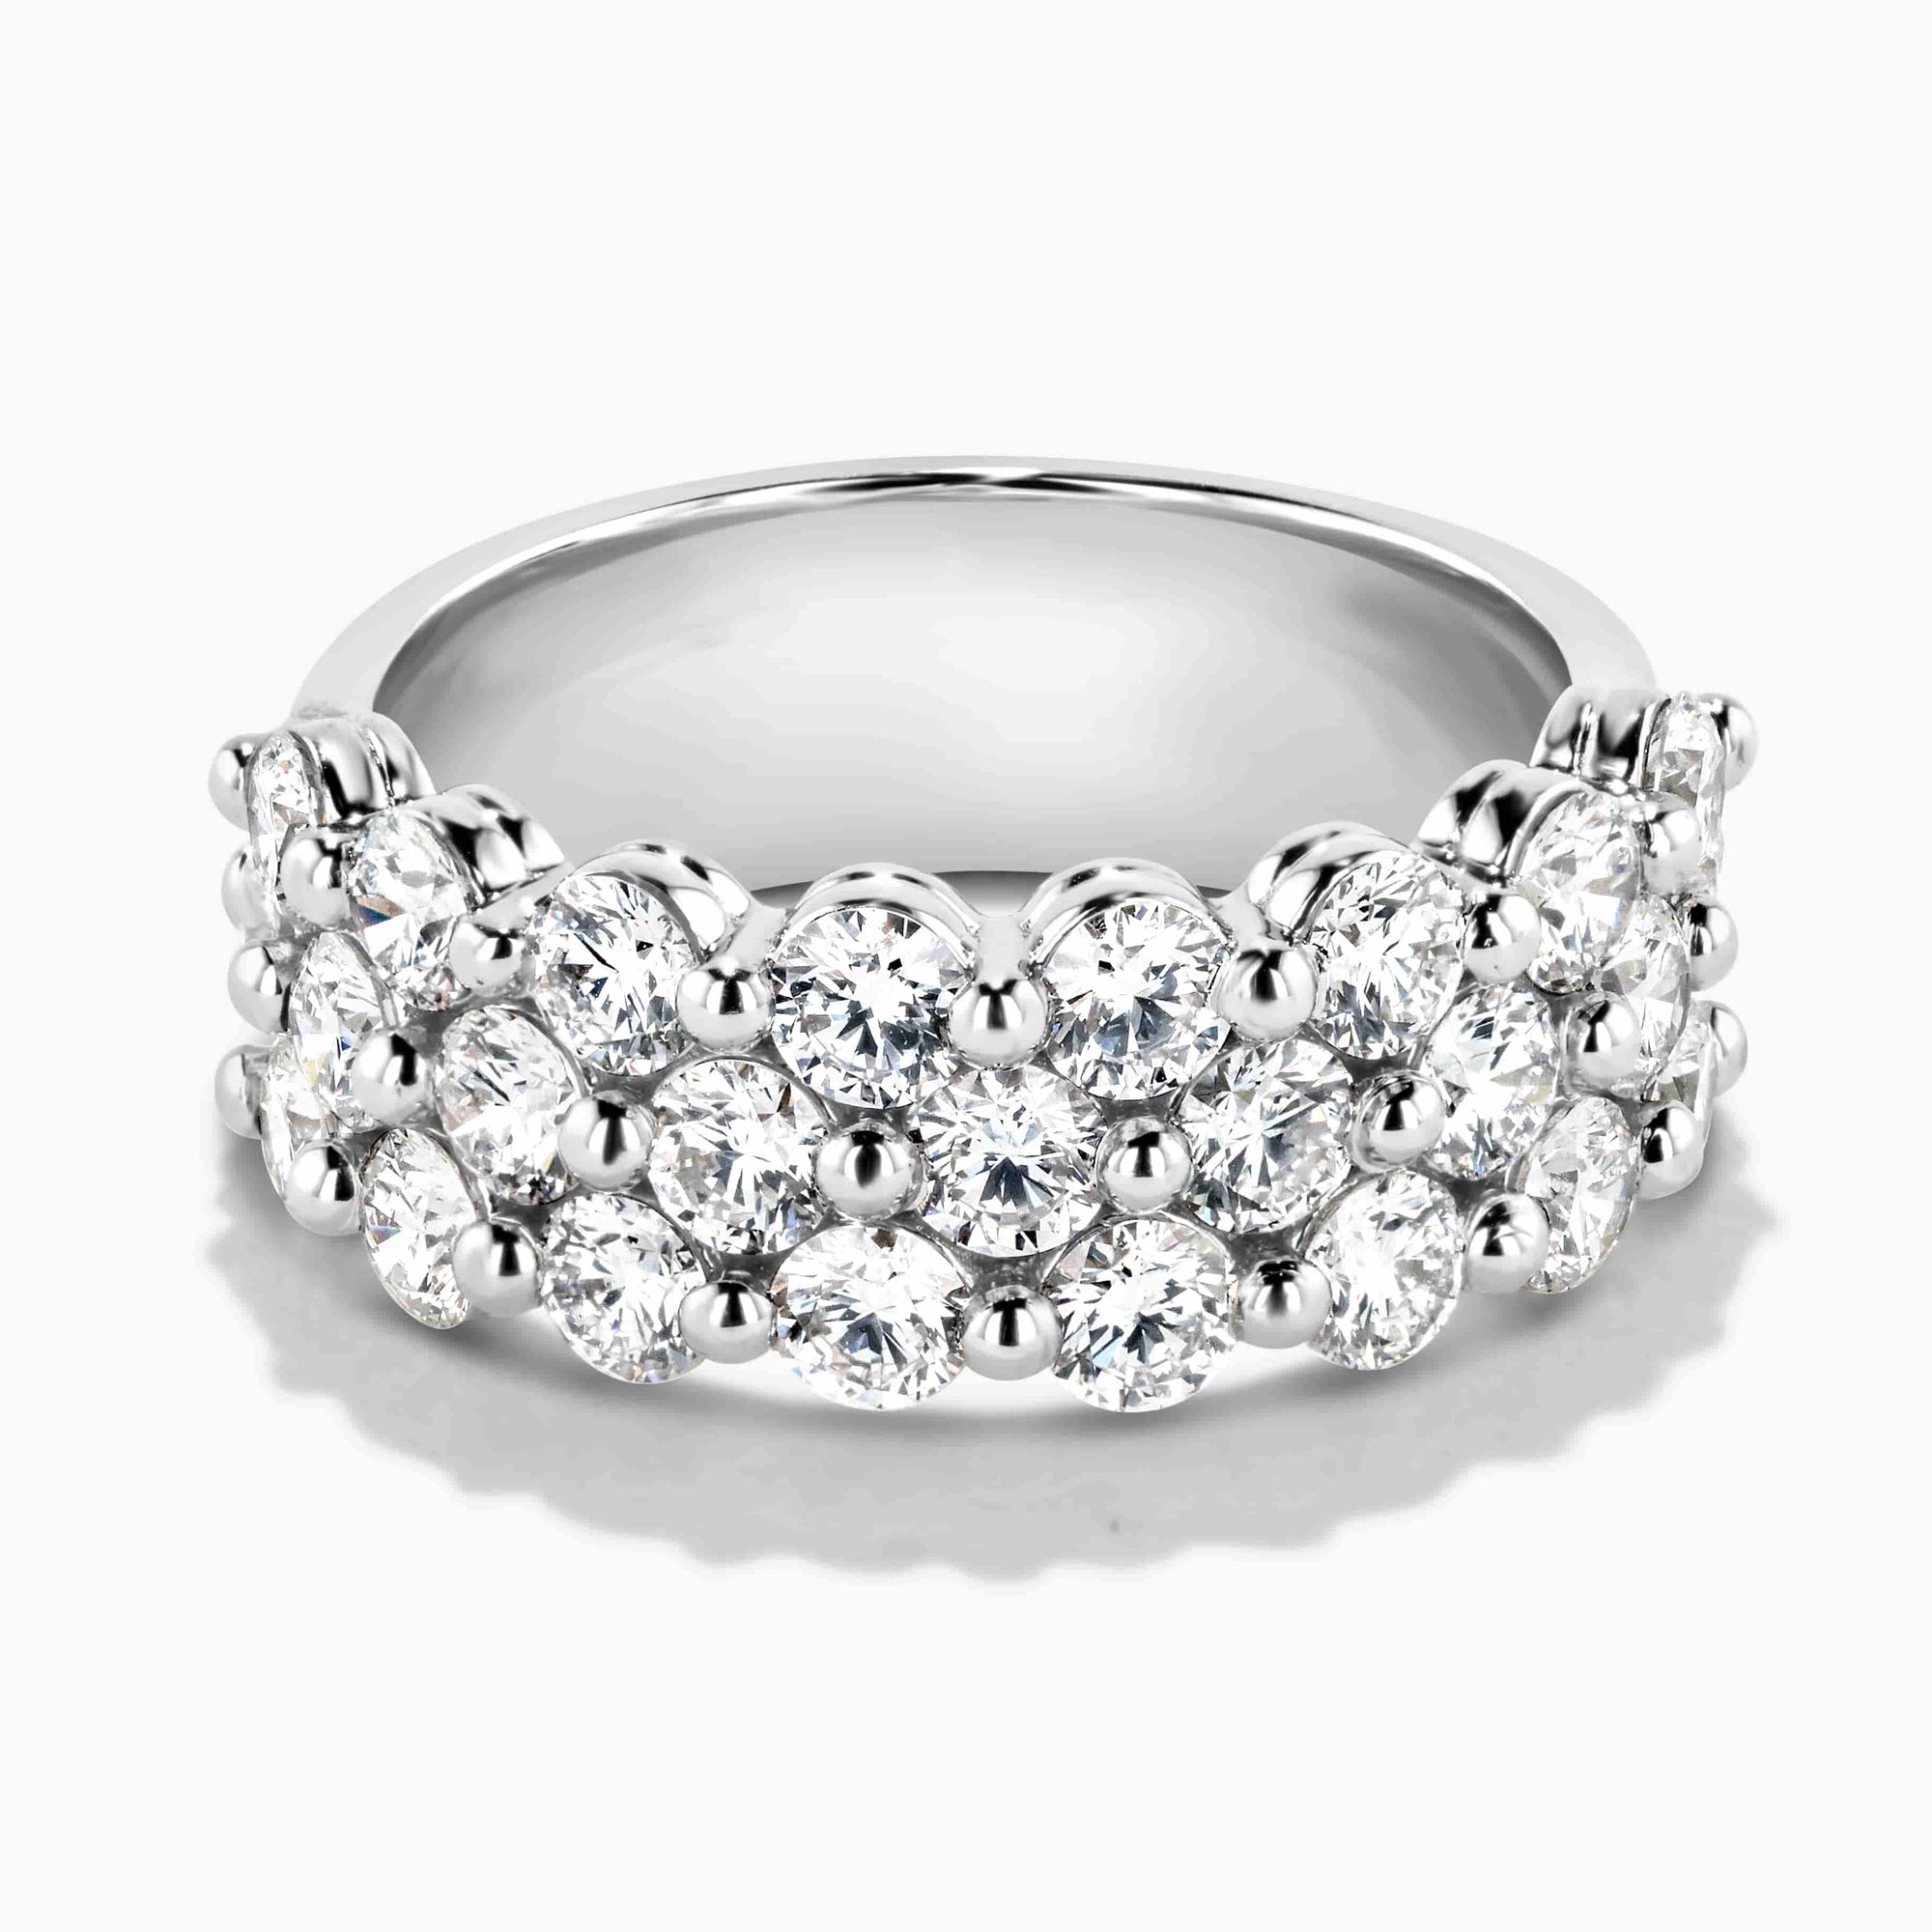 Three Row Lab Grown Diamond Band Shown In 14K White Gold|three row ring featuring lab grown diamonds by MiaDonna